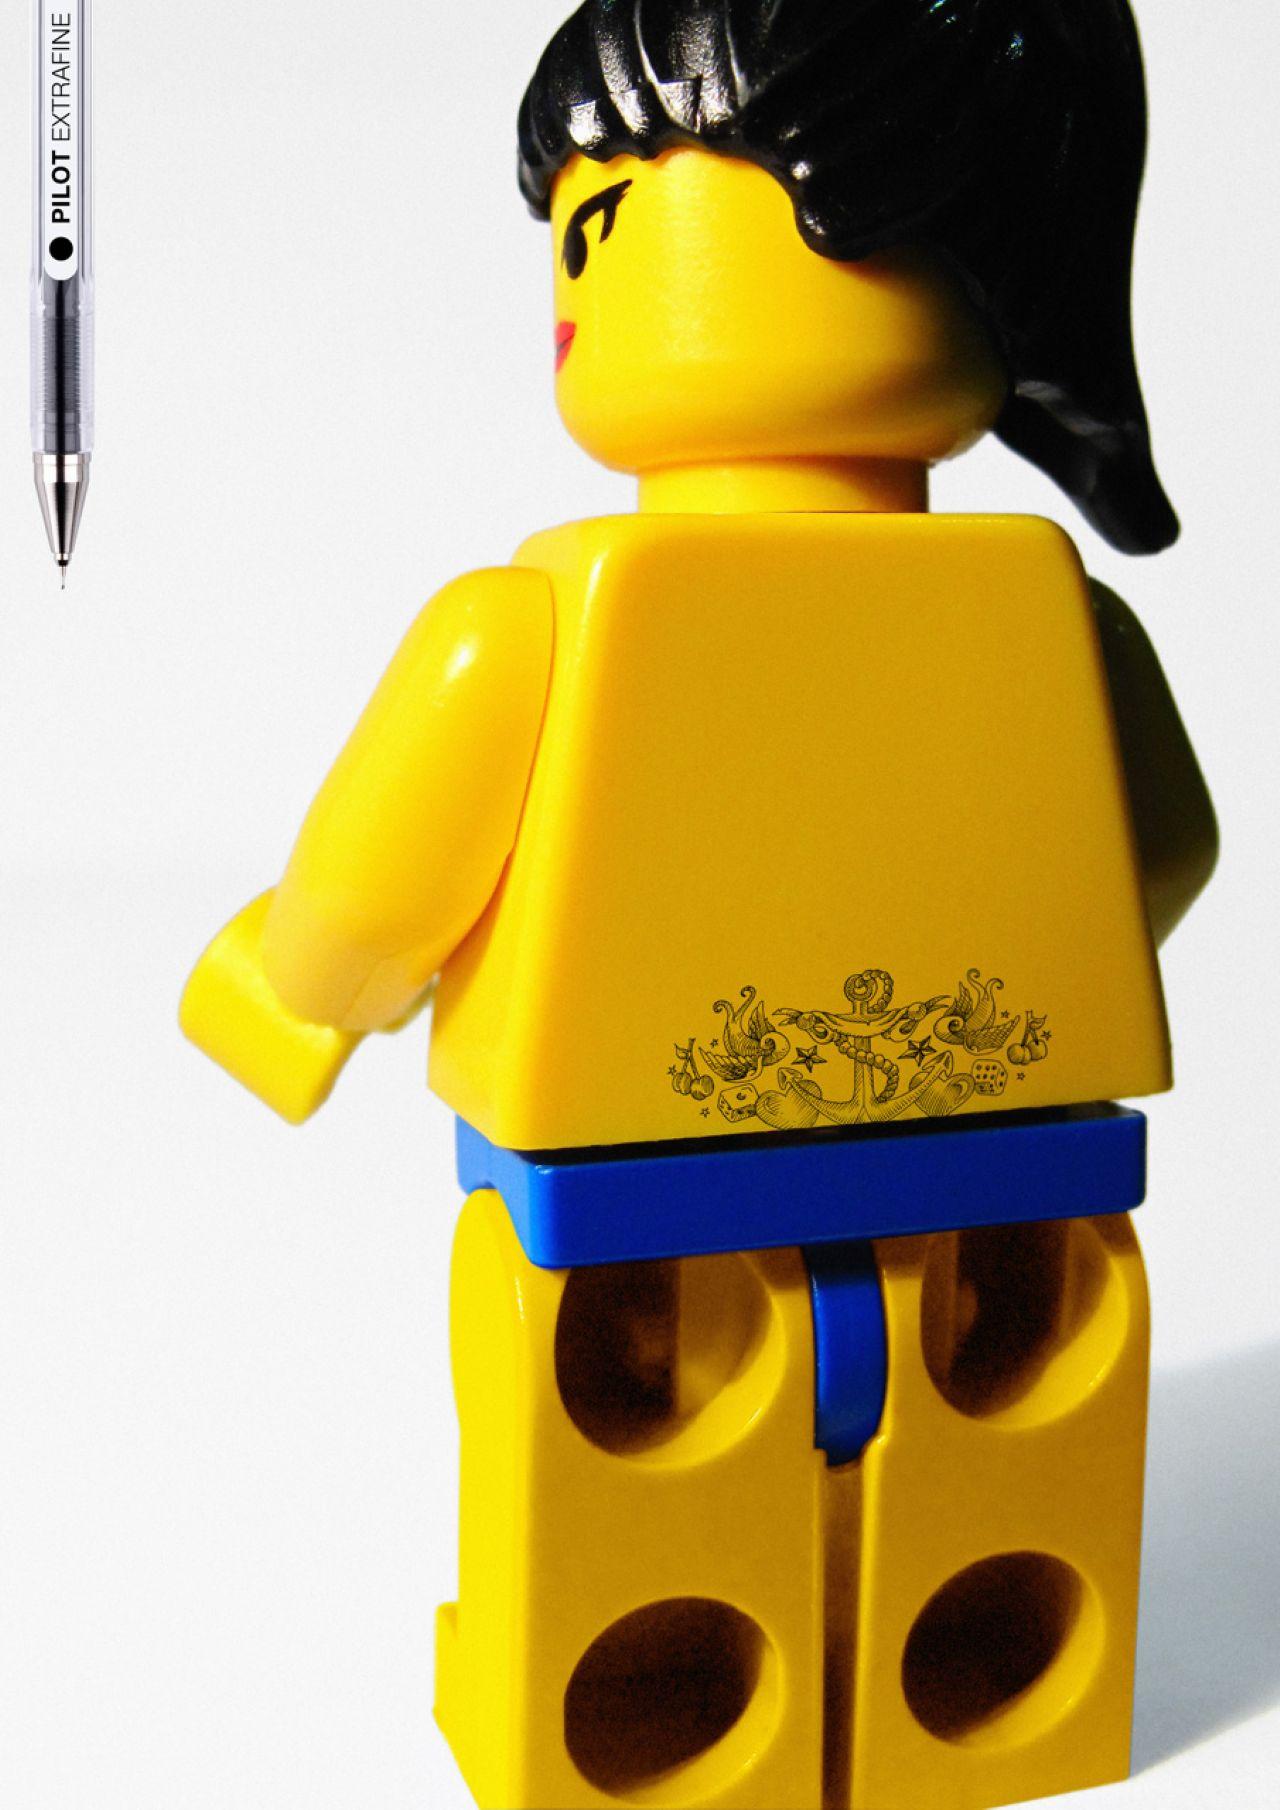 Pilot Print Advert By Grey: Legoman tattoo, lower back | Ads of the ...